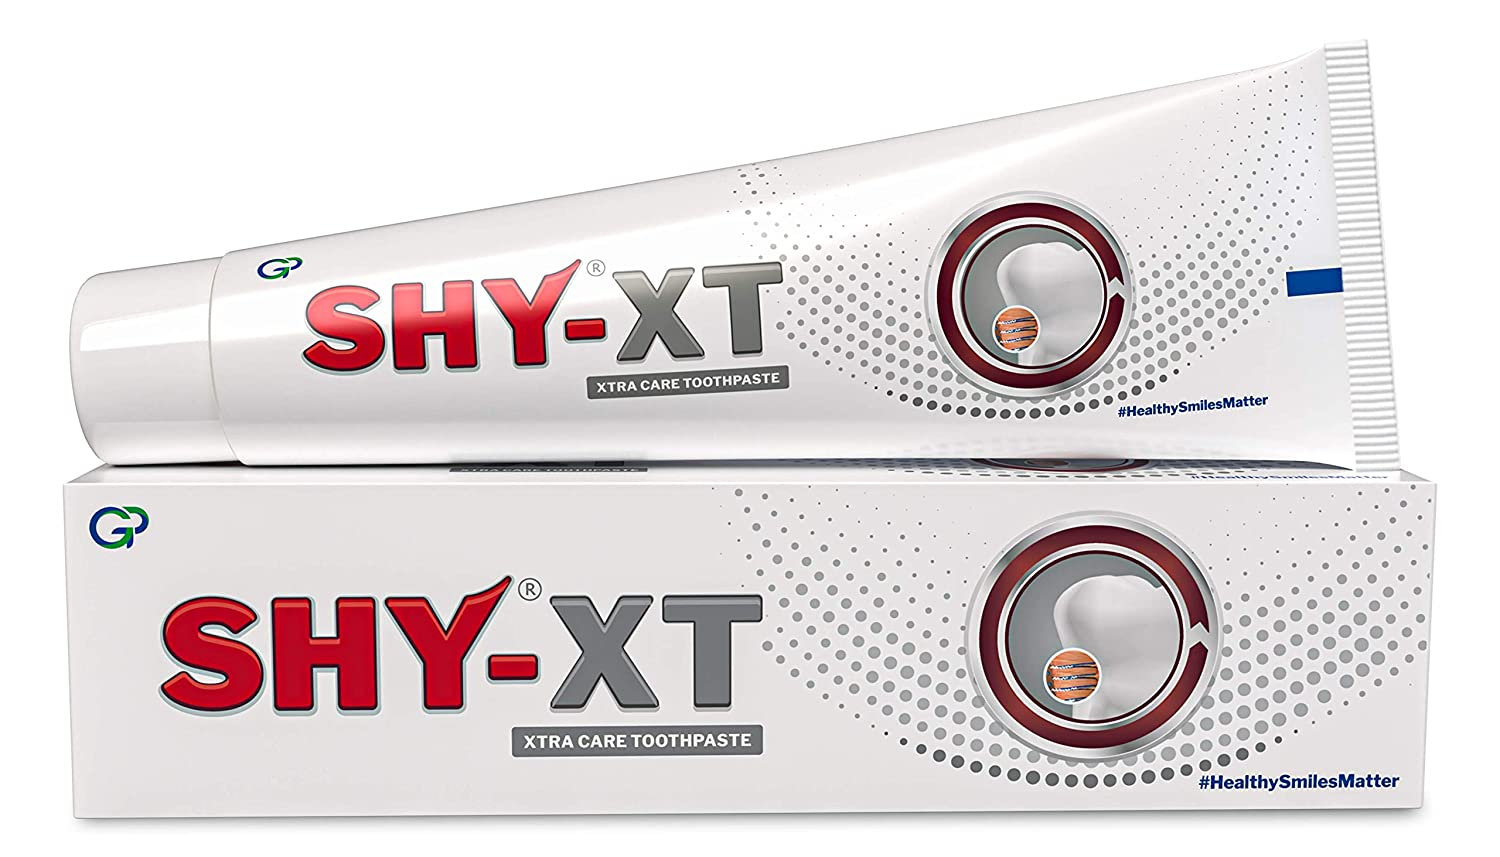 Shy-XT Toothpaste